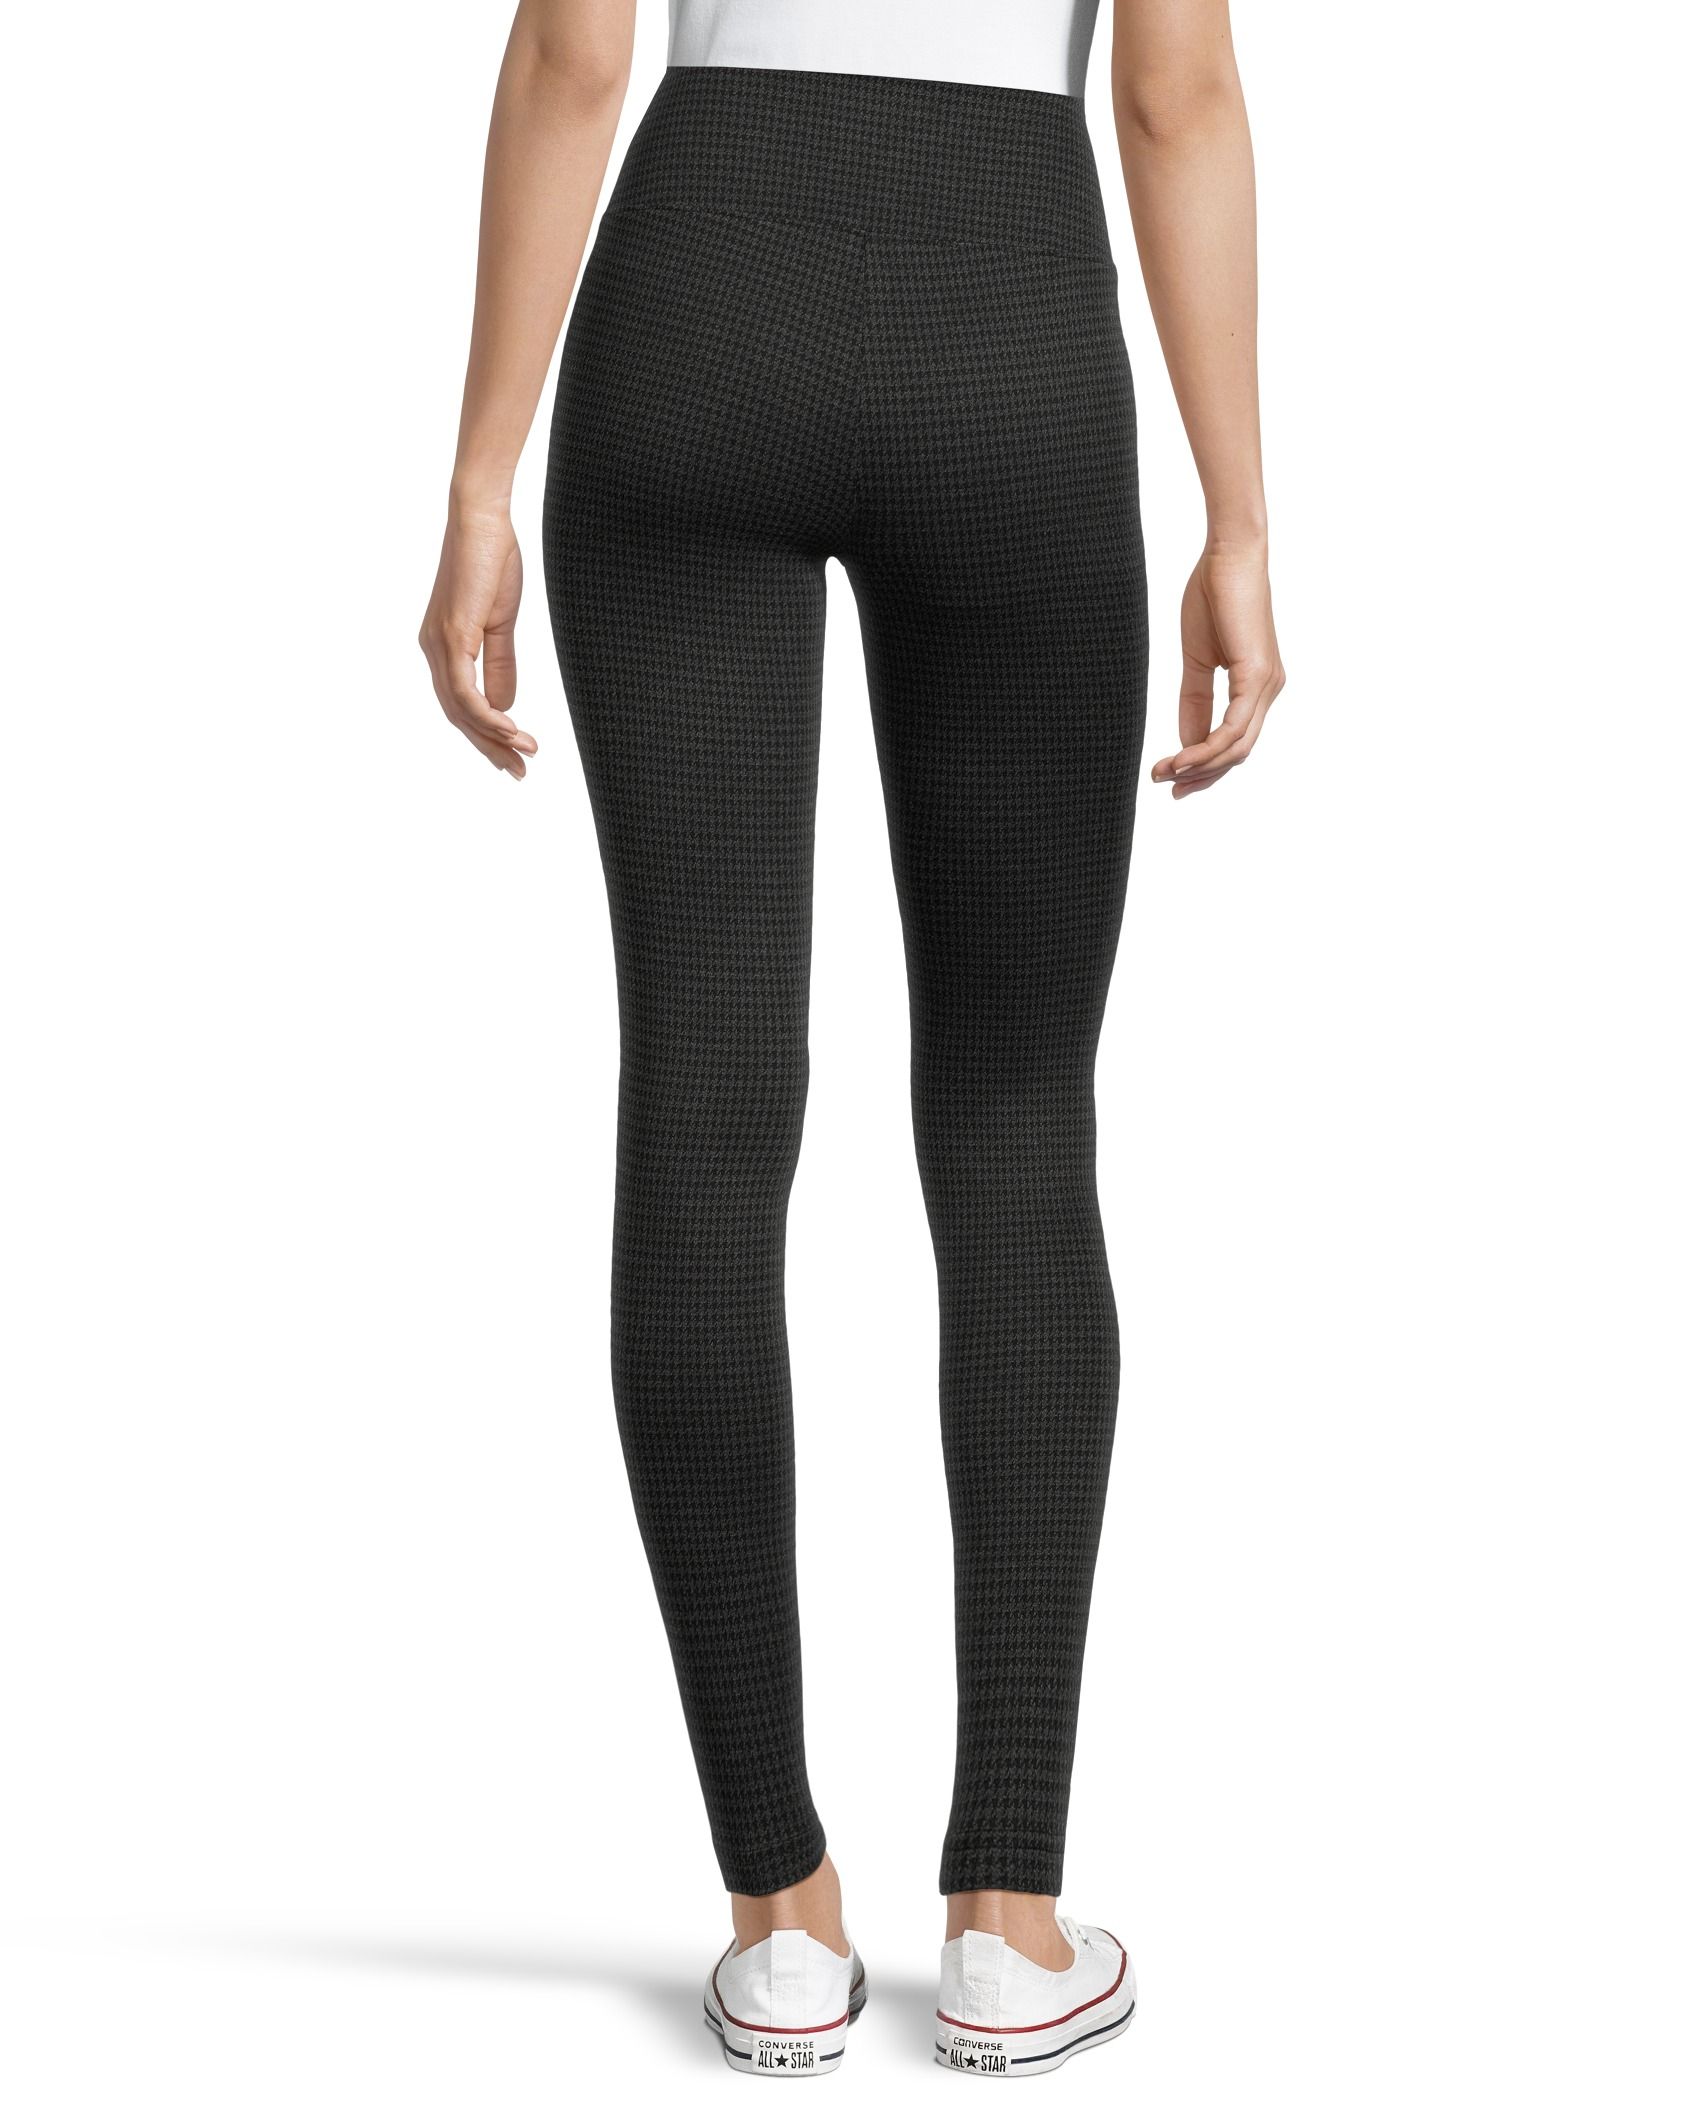 New 2 Pcs Women Casual Yoga Lounge Pants Cotton/Spandex ~ S - XL